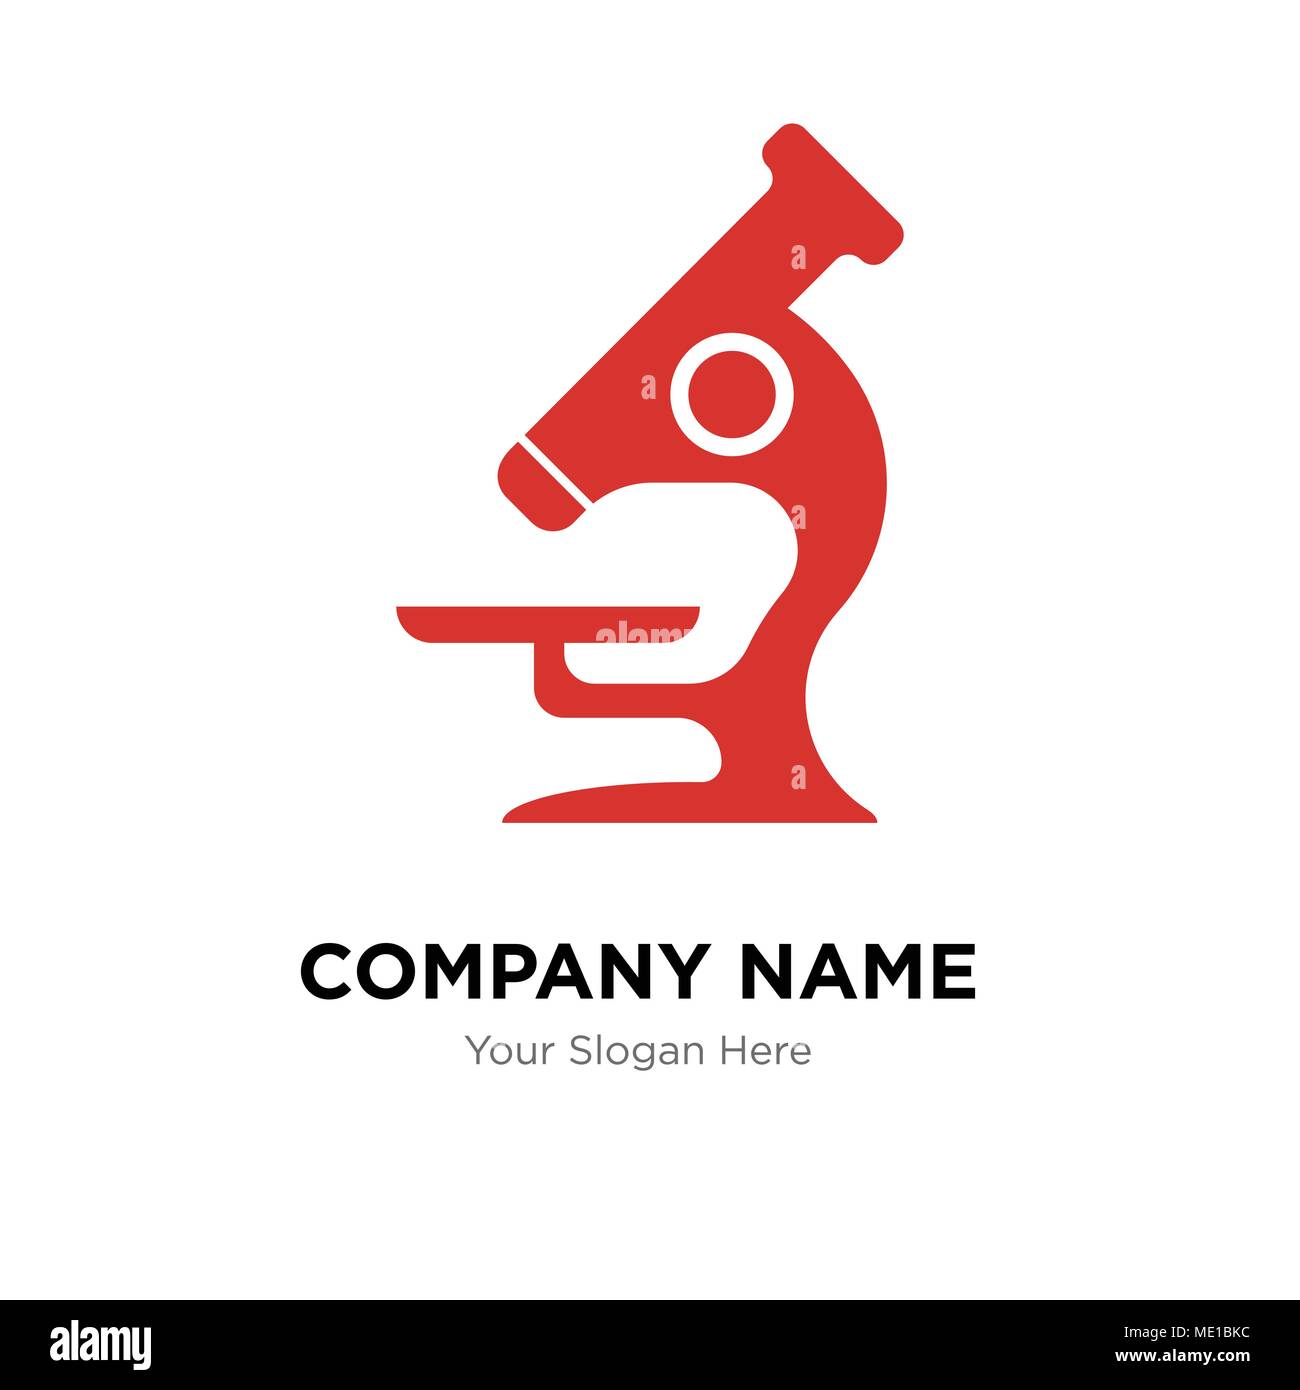 microscope company logo design template, Business corporate vector icon Stock Vector